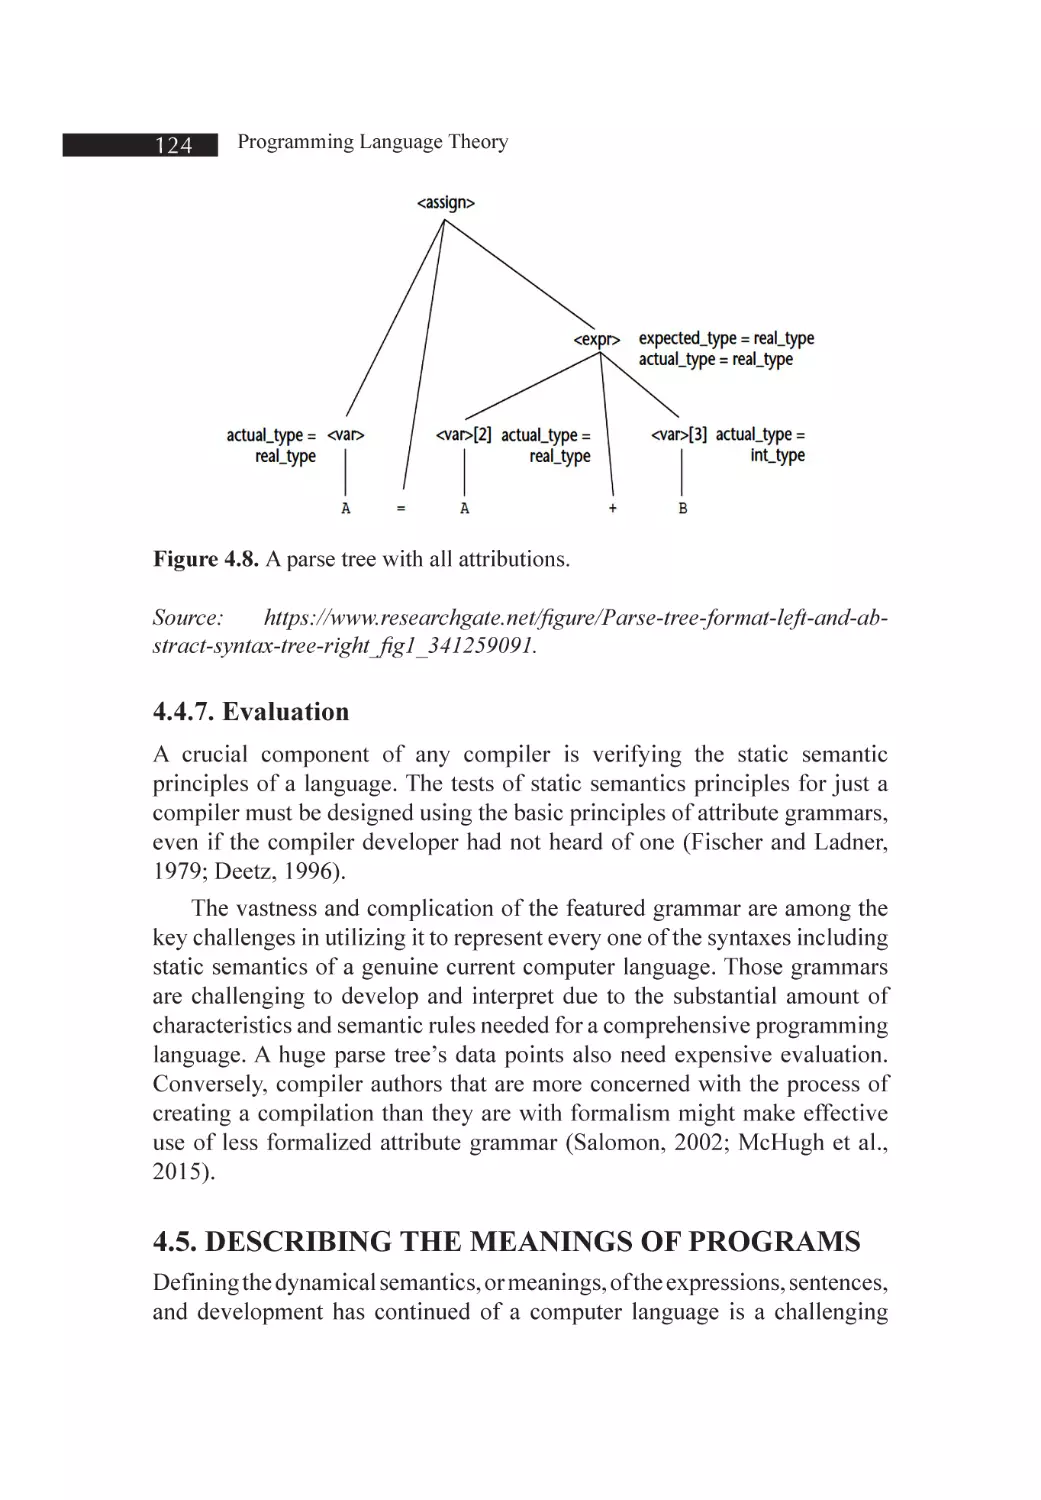 4.5. Describing the Meanings of Programs